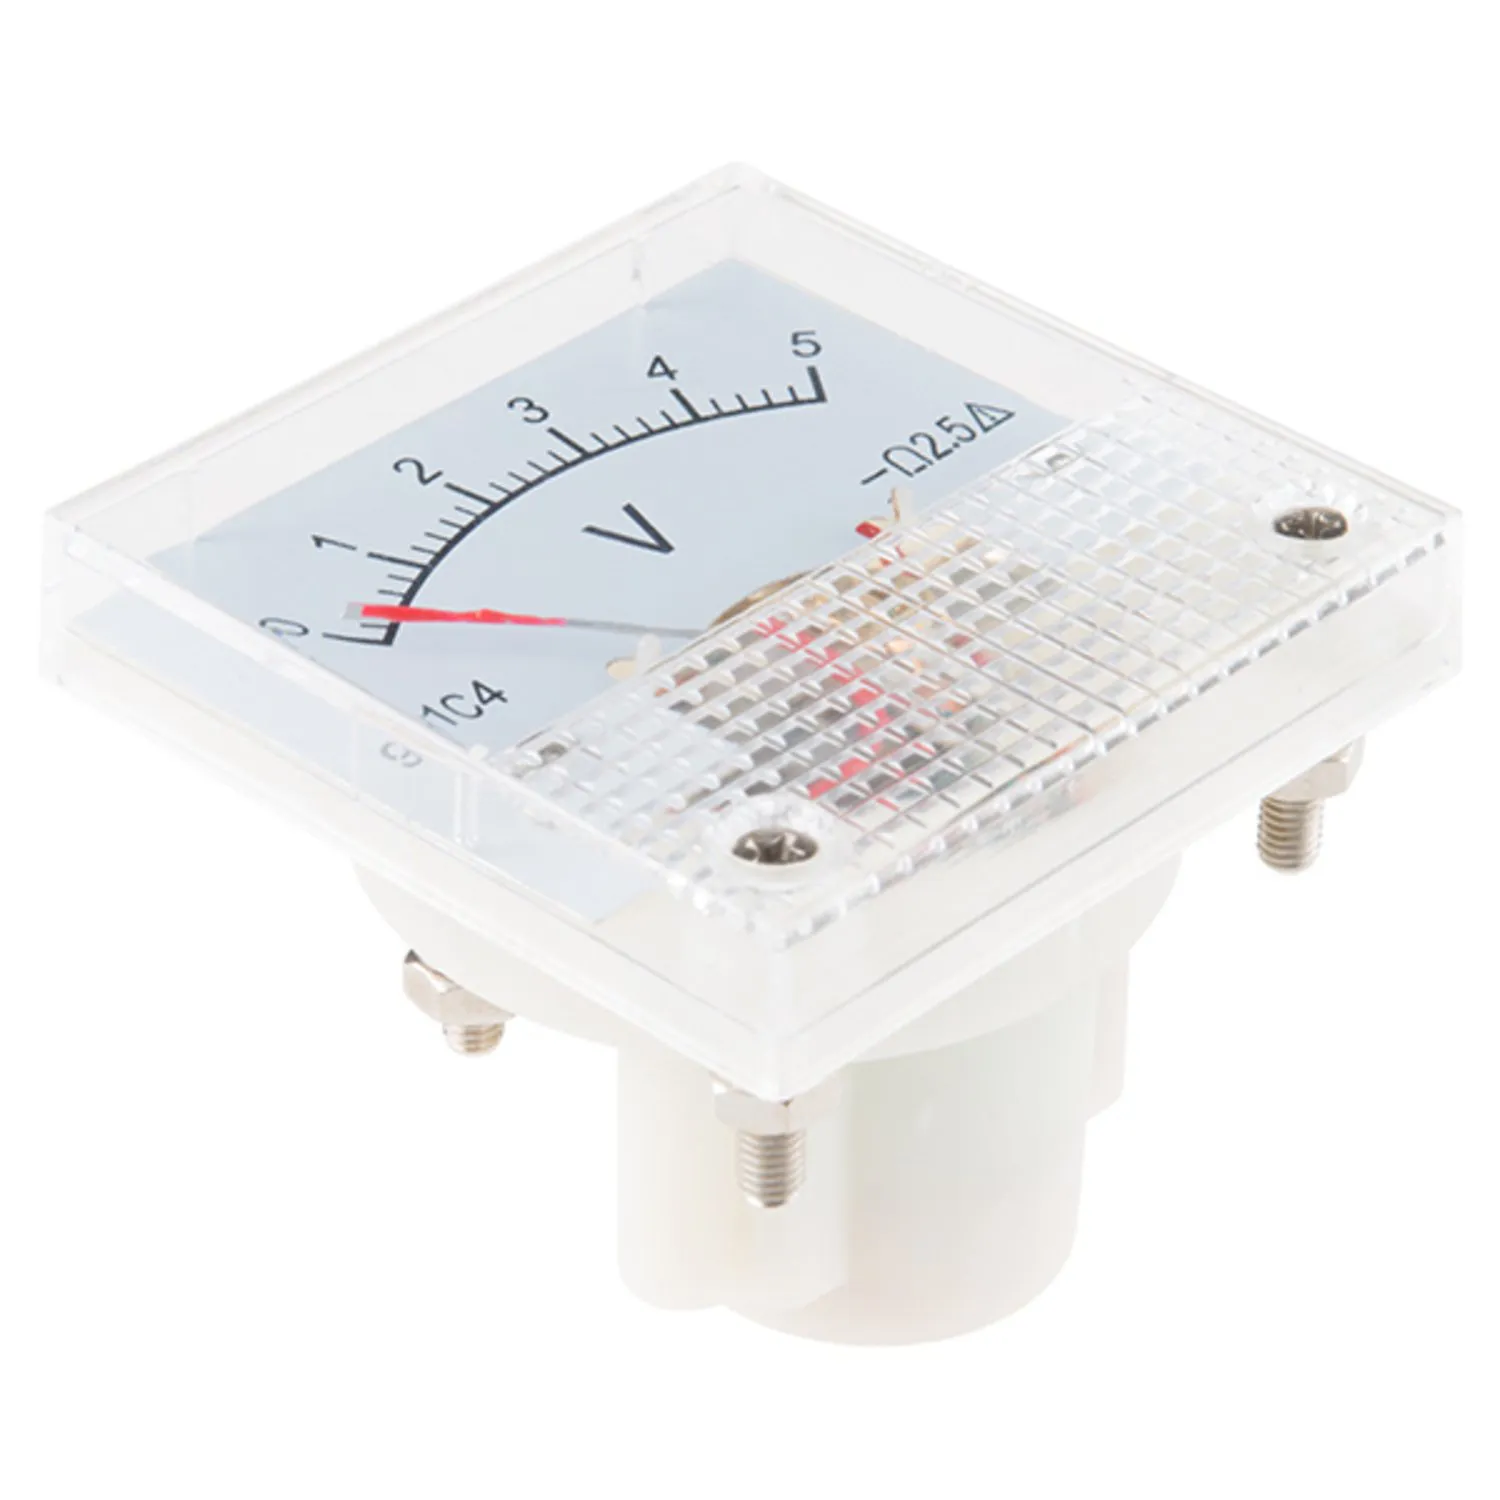 Photo of Analog Panel Meter - 0 to 5 VDC